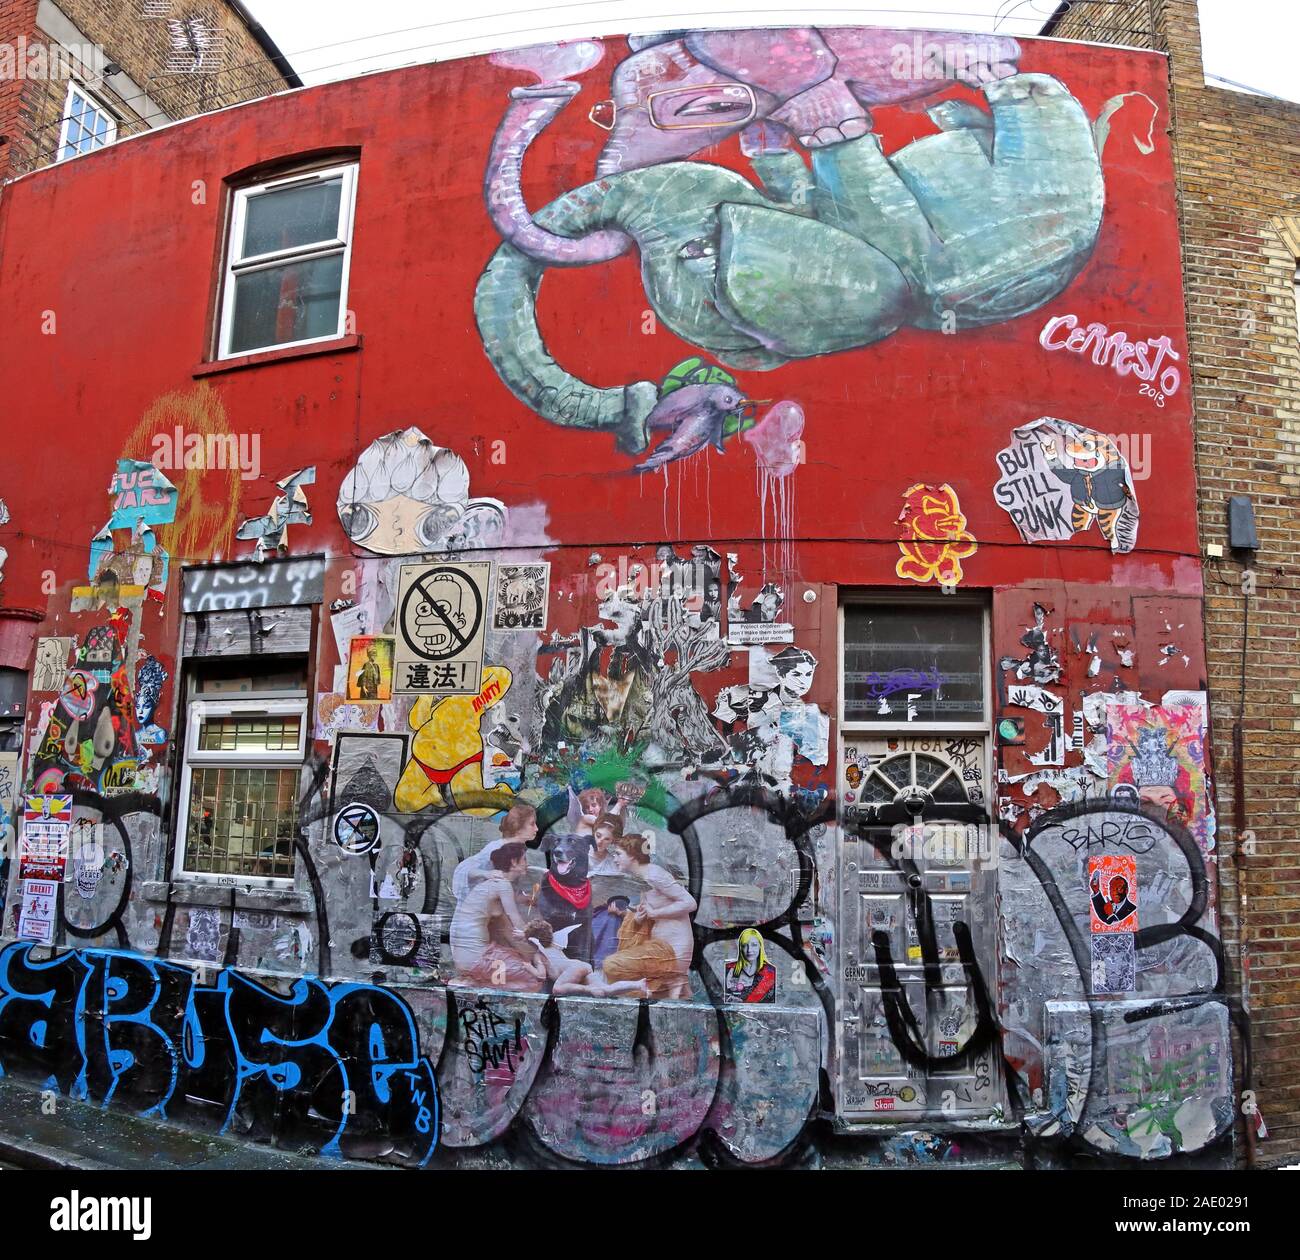 Elefante,etiqueta de abuso,Brick Lane,arte y graffiti,Shoreditch,Tower Hamlets,East End,Londres,South East,Inglaterra,UK, E1 6QL Foto de stock